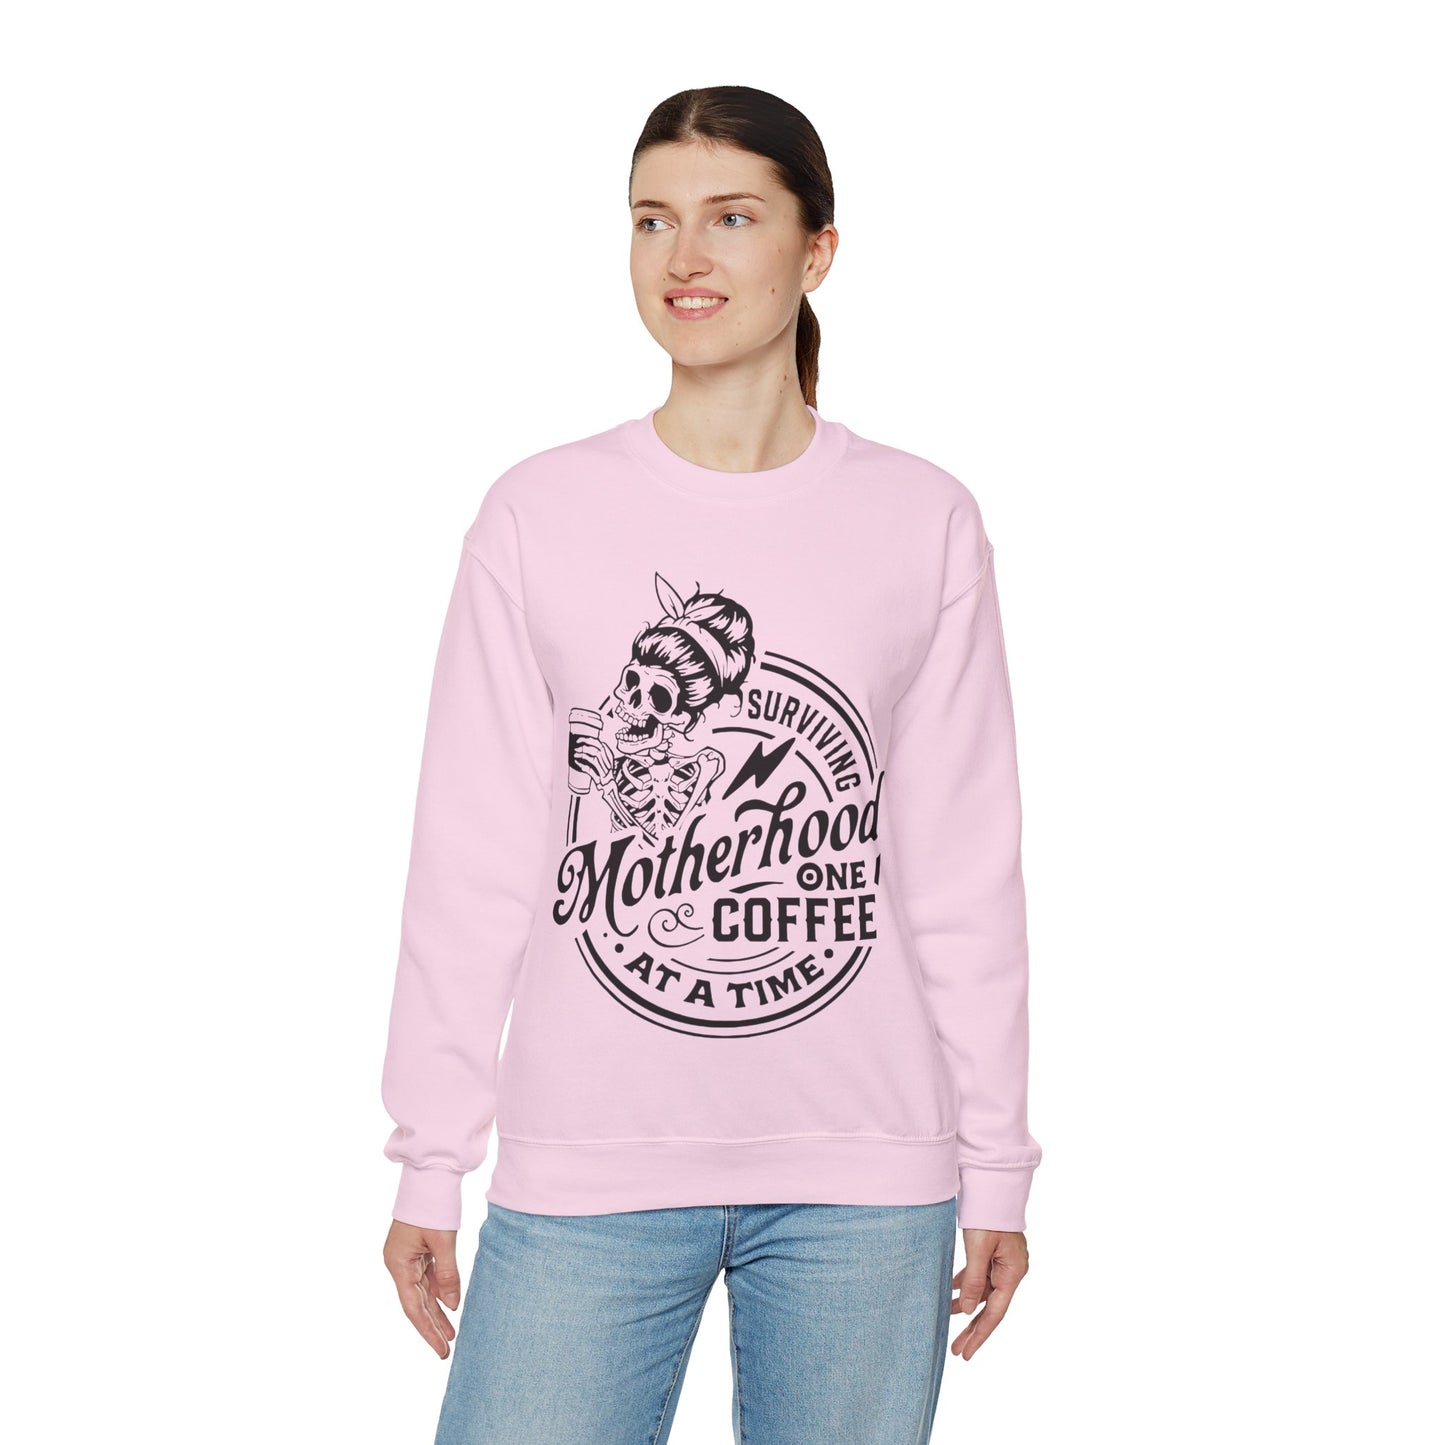 Surviving Motherhood one Coffee at a Time Sweatshirt